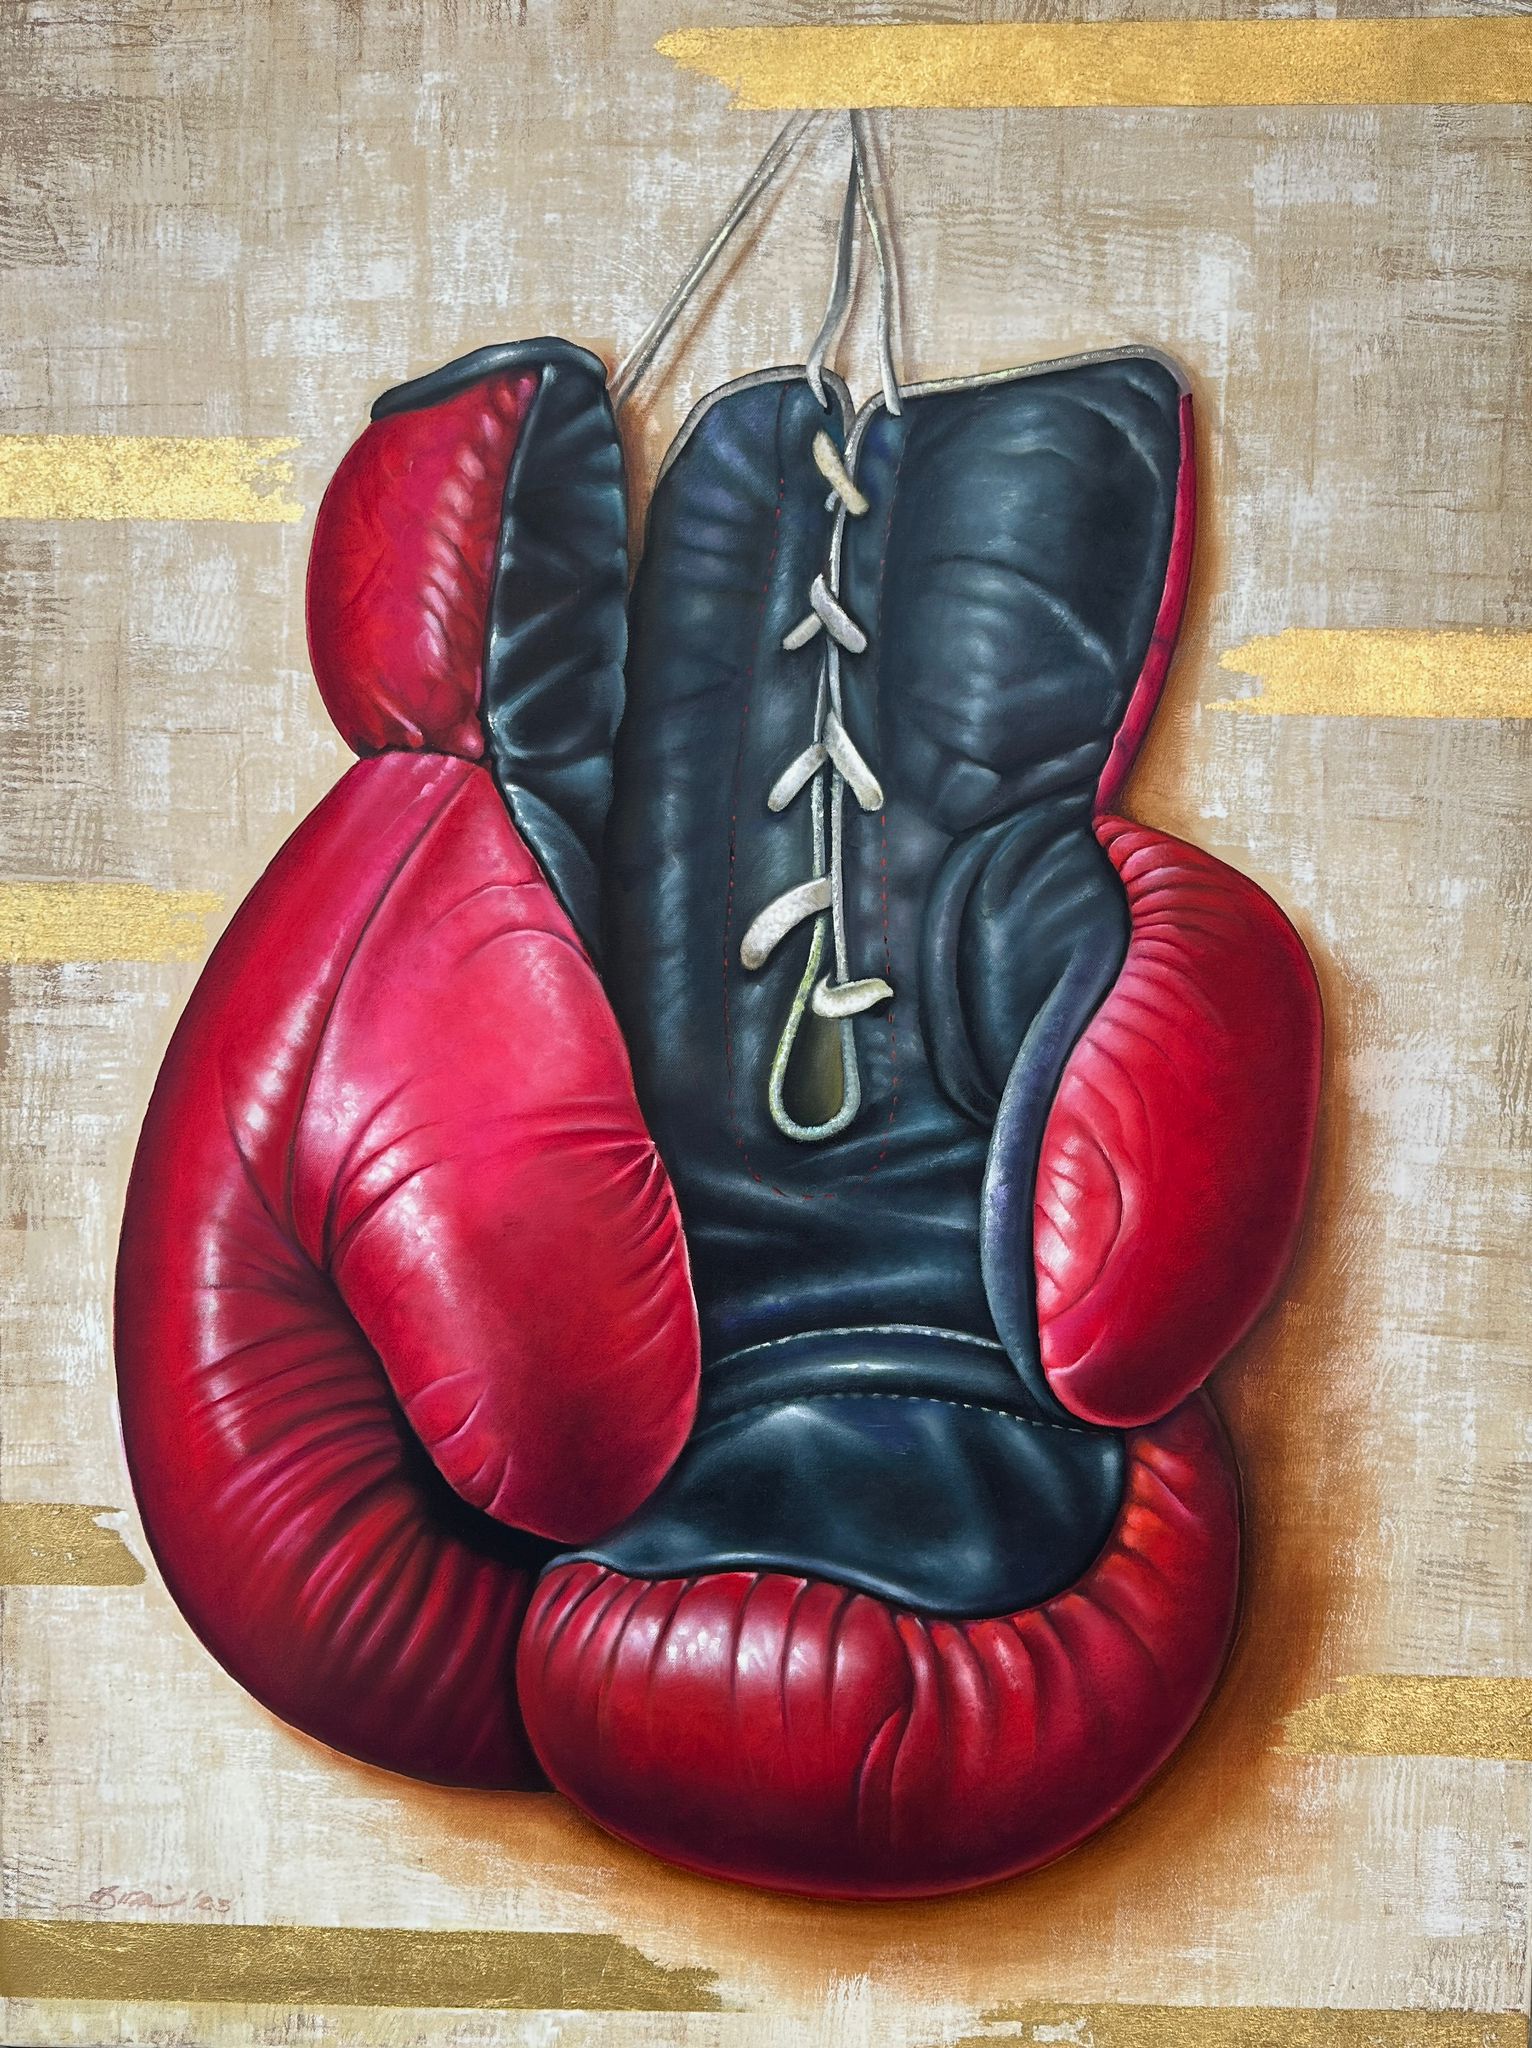 emotion, boxing, PassionII, Oil on canvas, painting, Jayaraman Kalidass